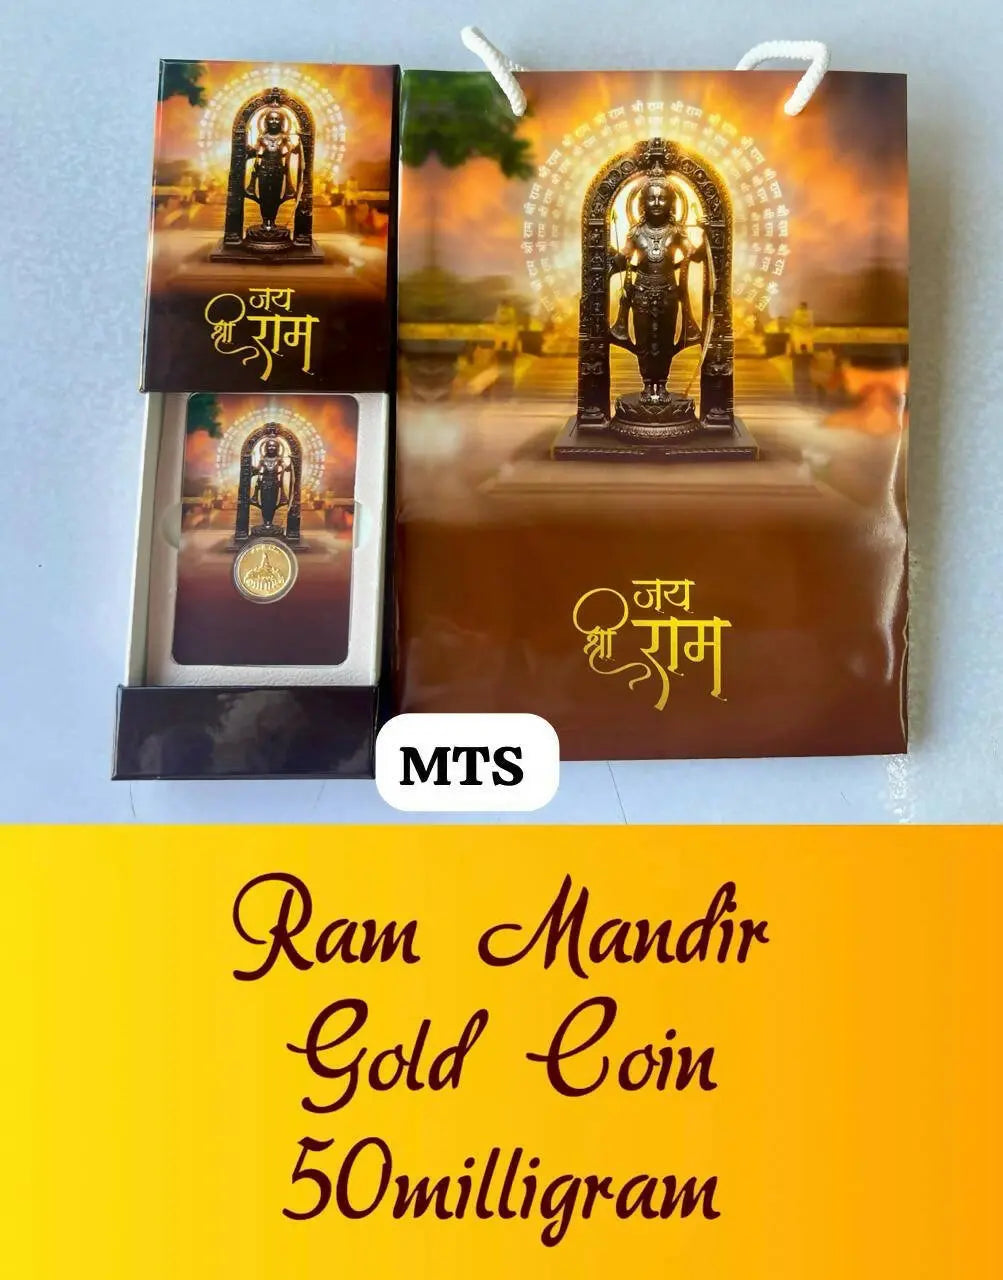 Ram Mandir Gold Coin Sarafa Bazar India